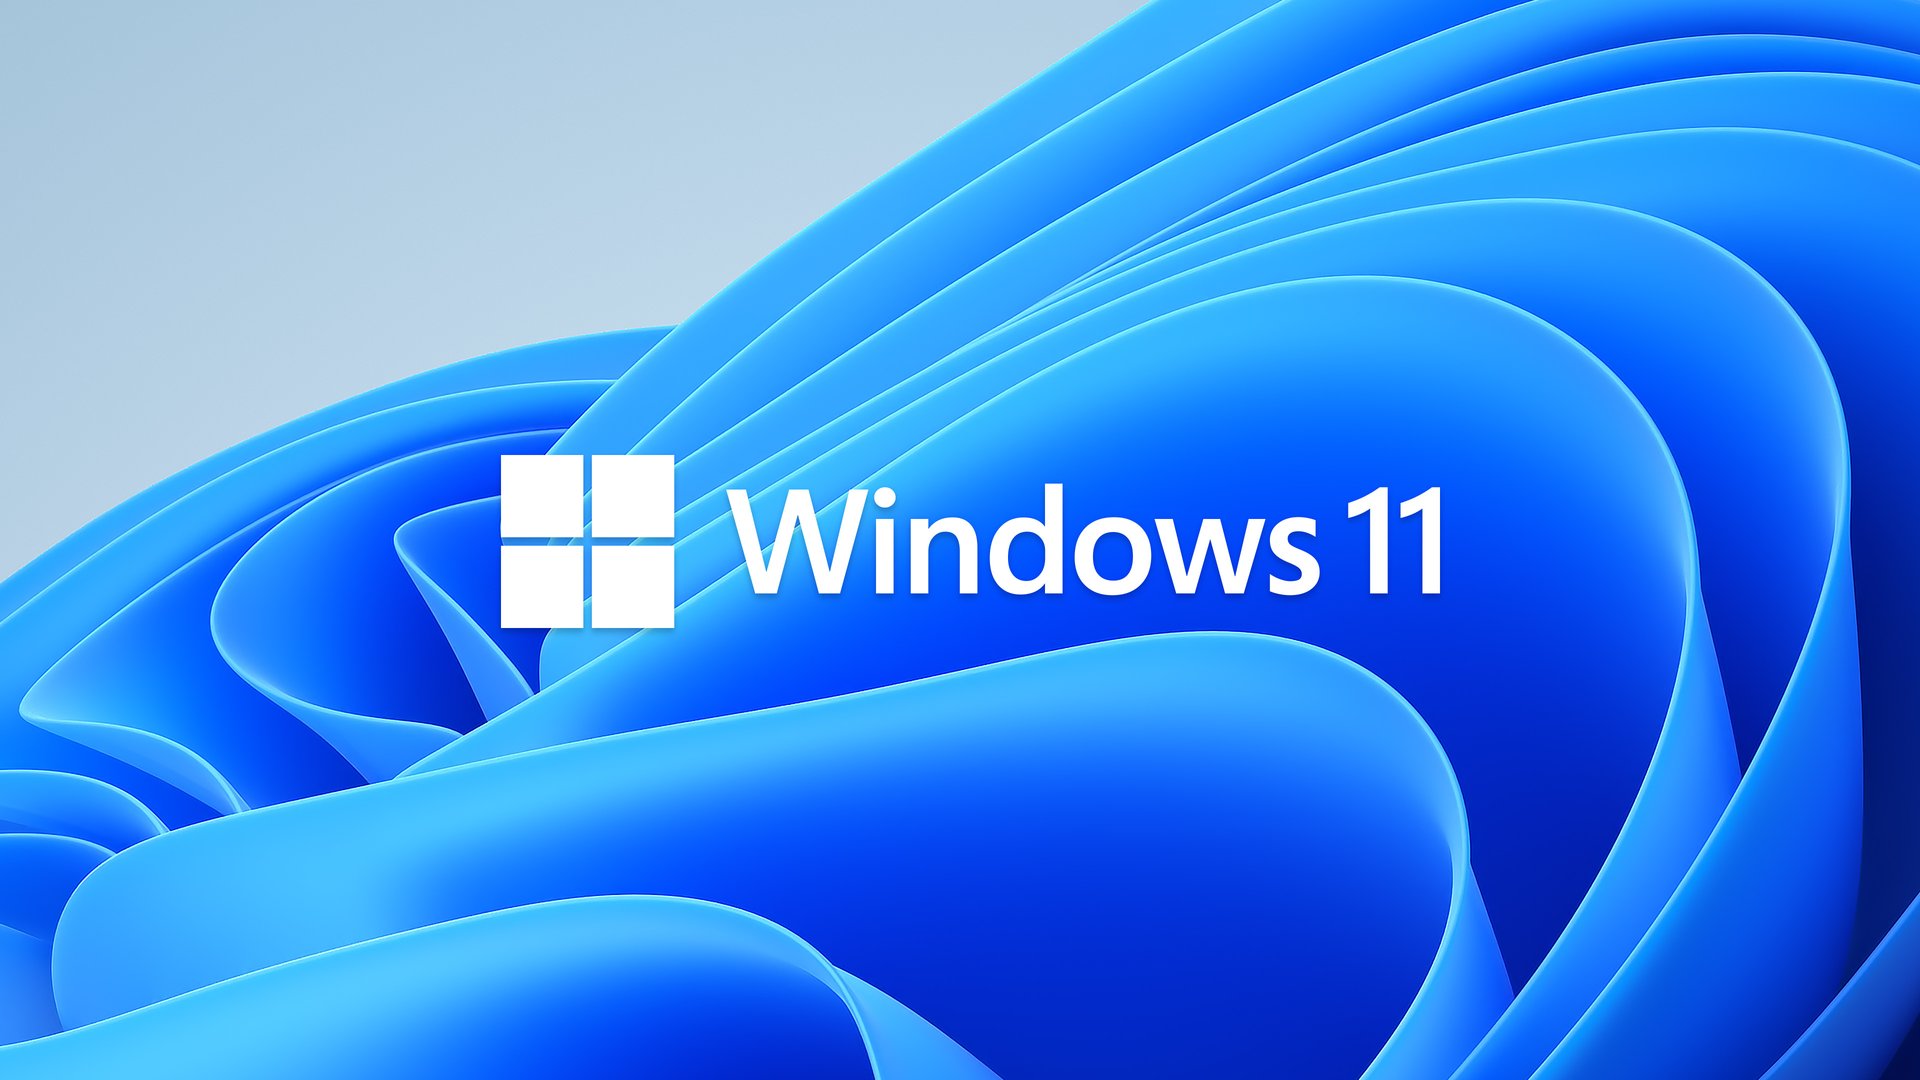 Gamers are hesitant to adopt Windows 11